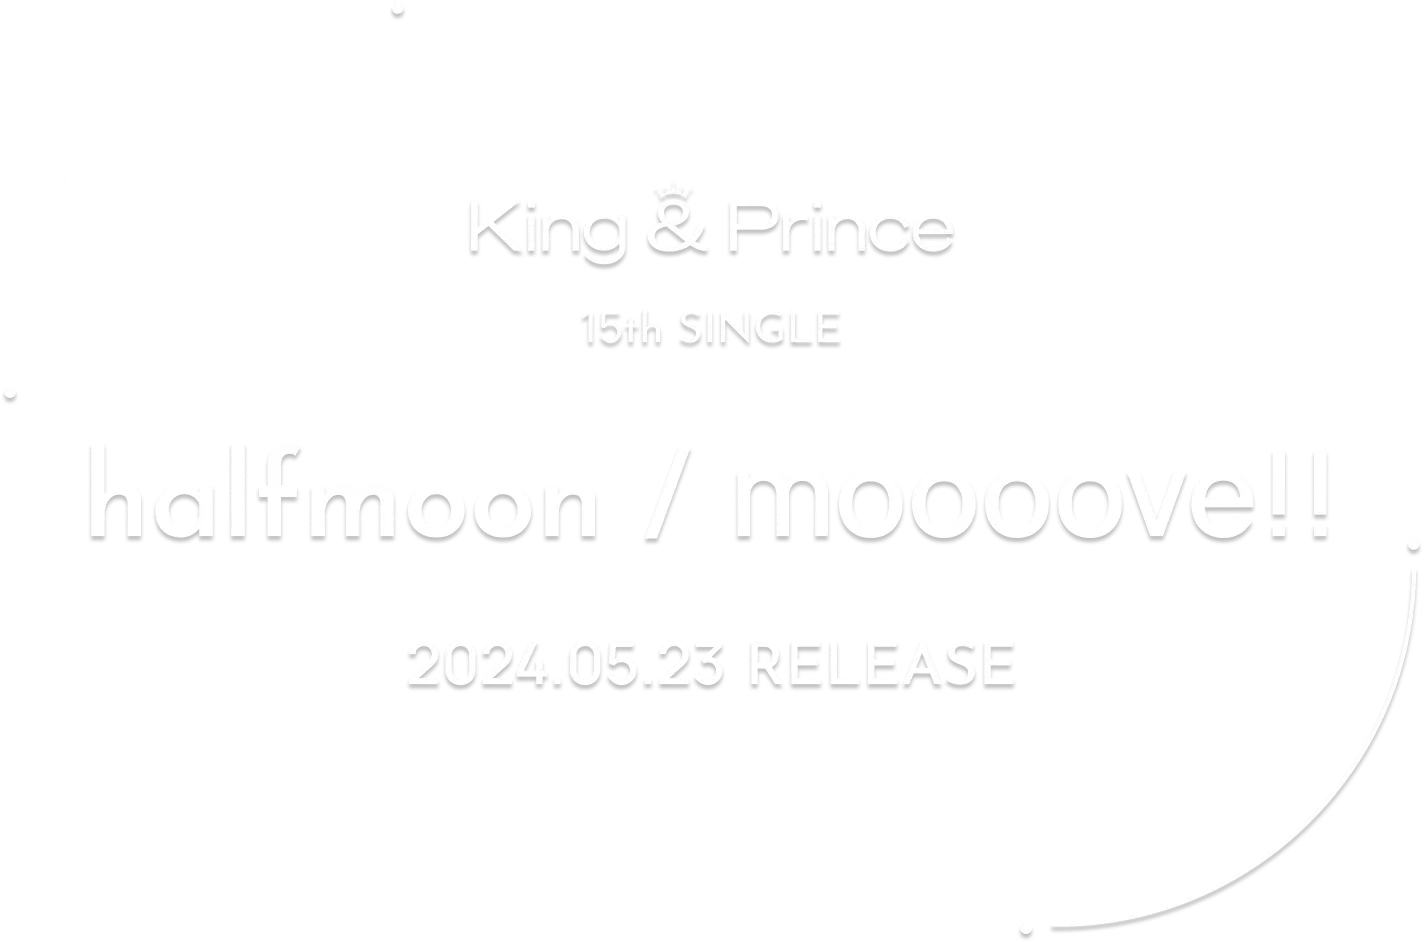 king & prince 15th single halfmoon / 95 2024.05.23 RELEASE